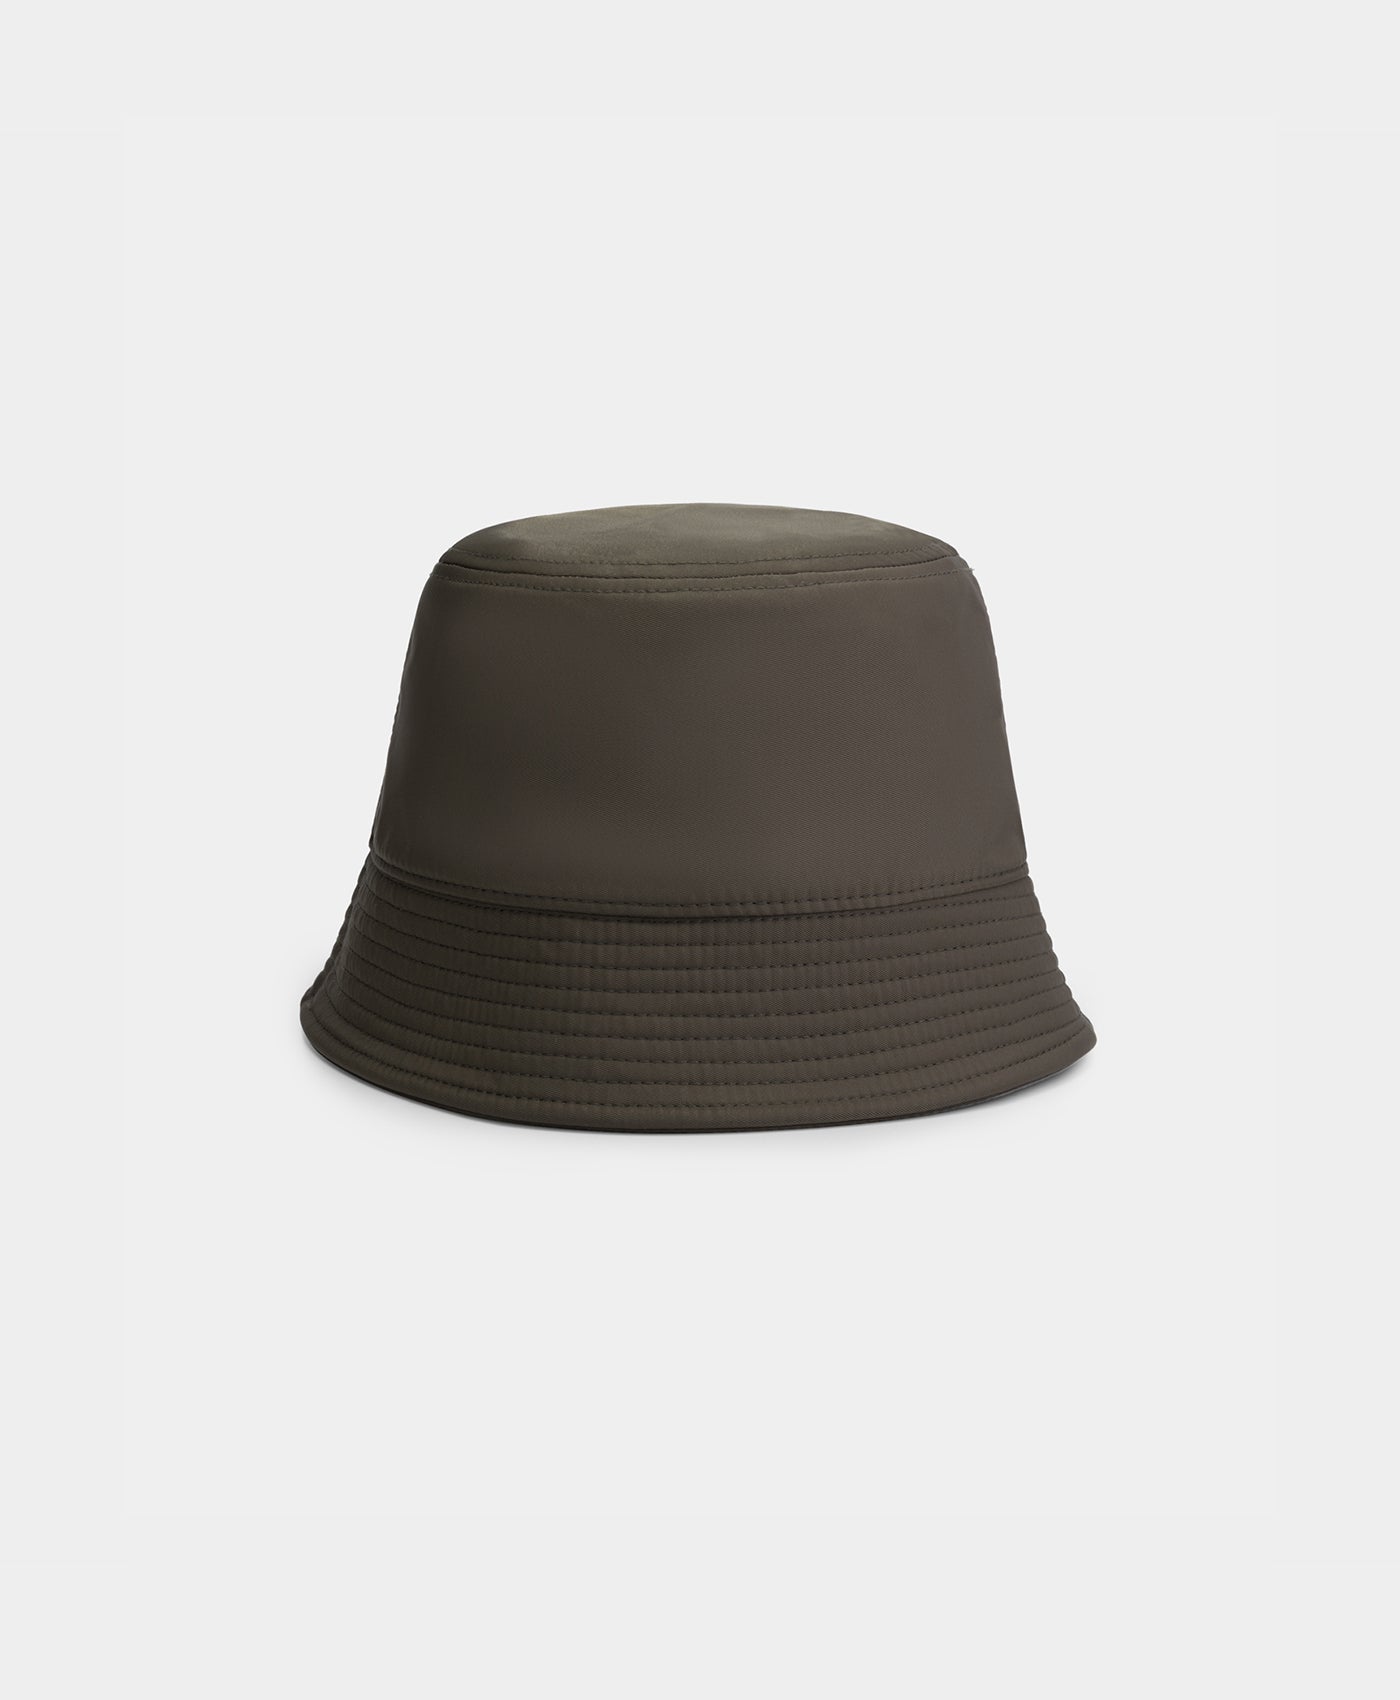 DP - Taupe Grey Azurki Hat Nylon - Packshot - Rear